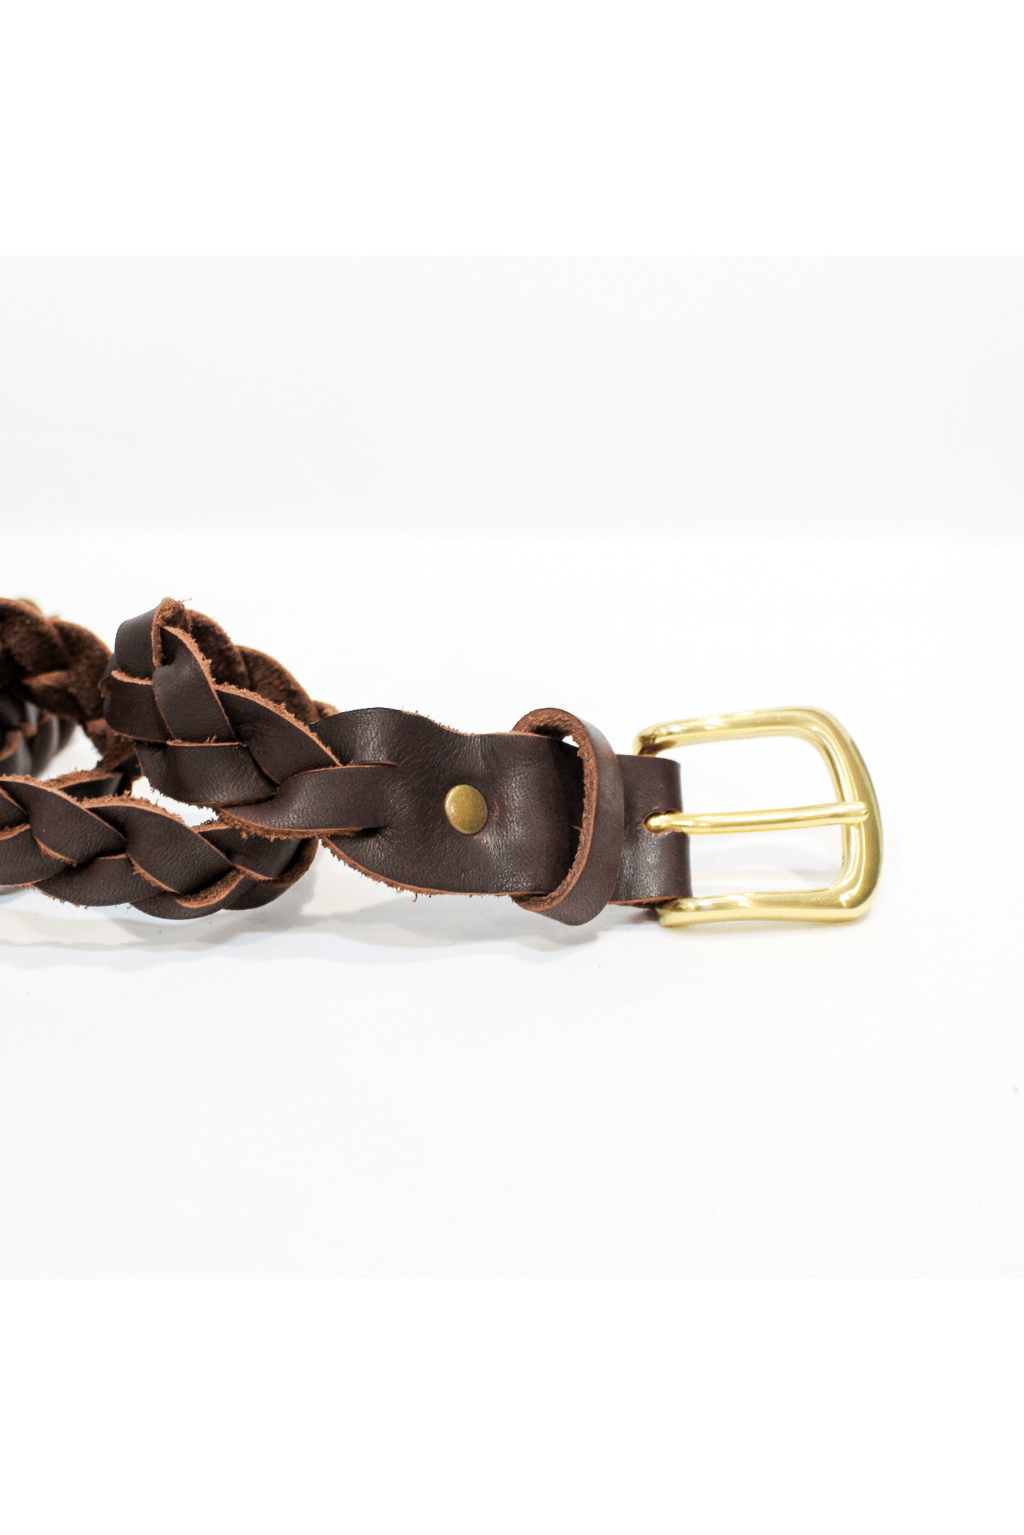 Leather Plaited Belt - chocolate